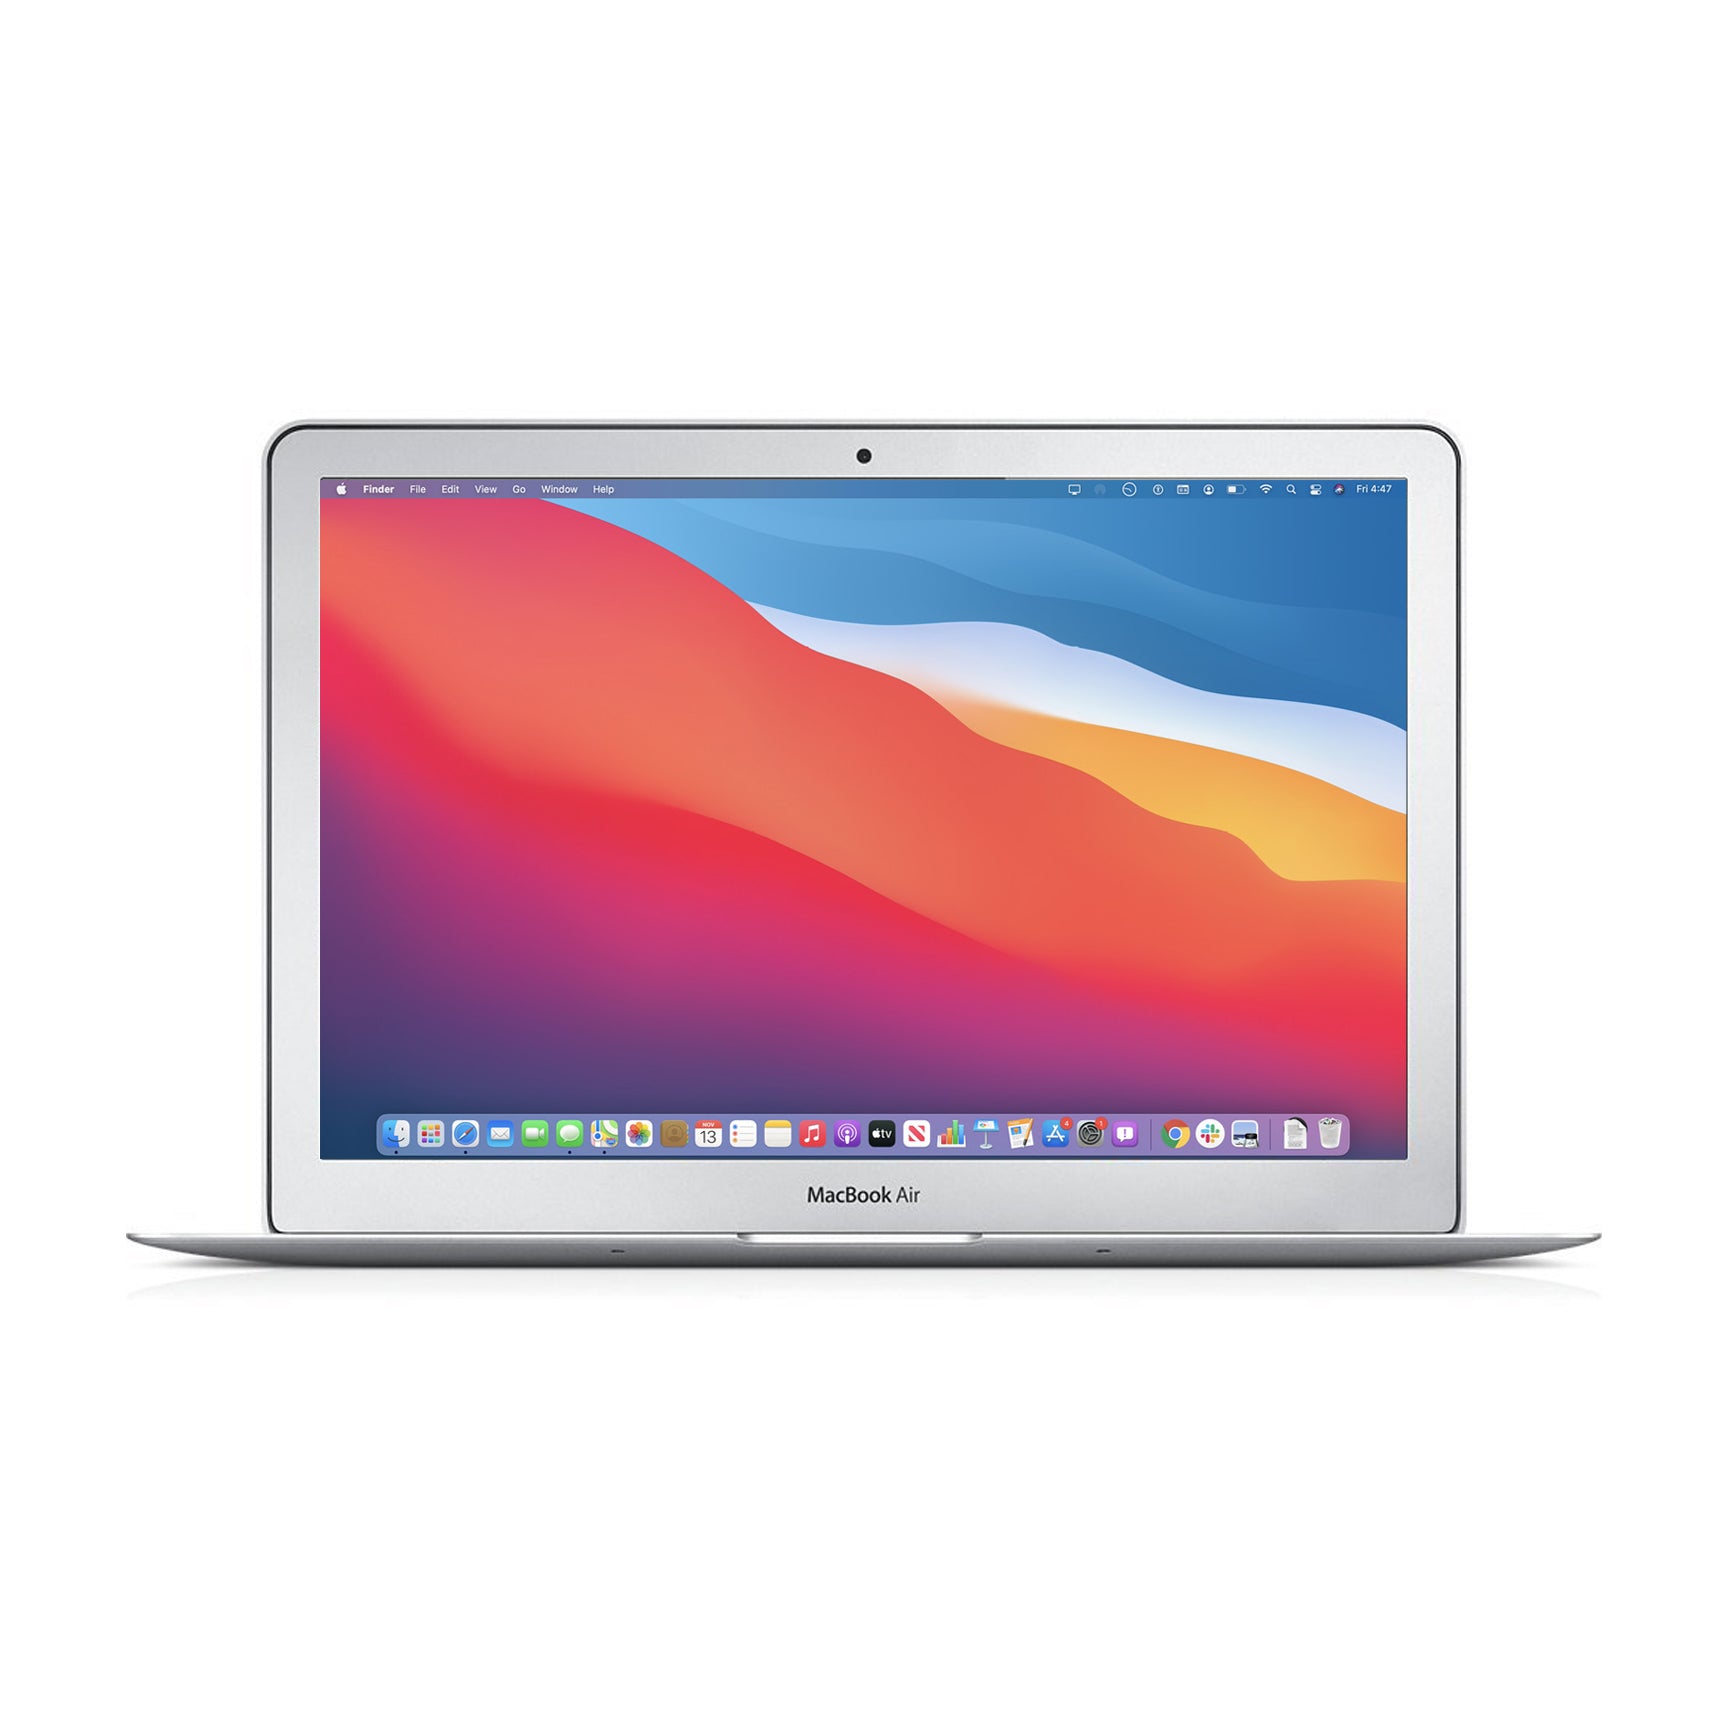 MacBook Air 13-inch 1.8Ghz | Refurb MacBook | Tech to School